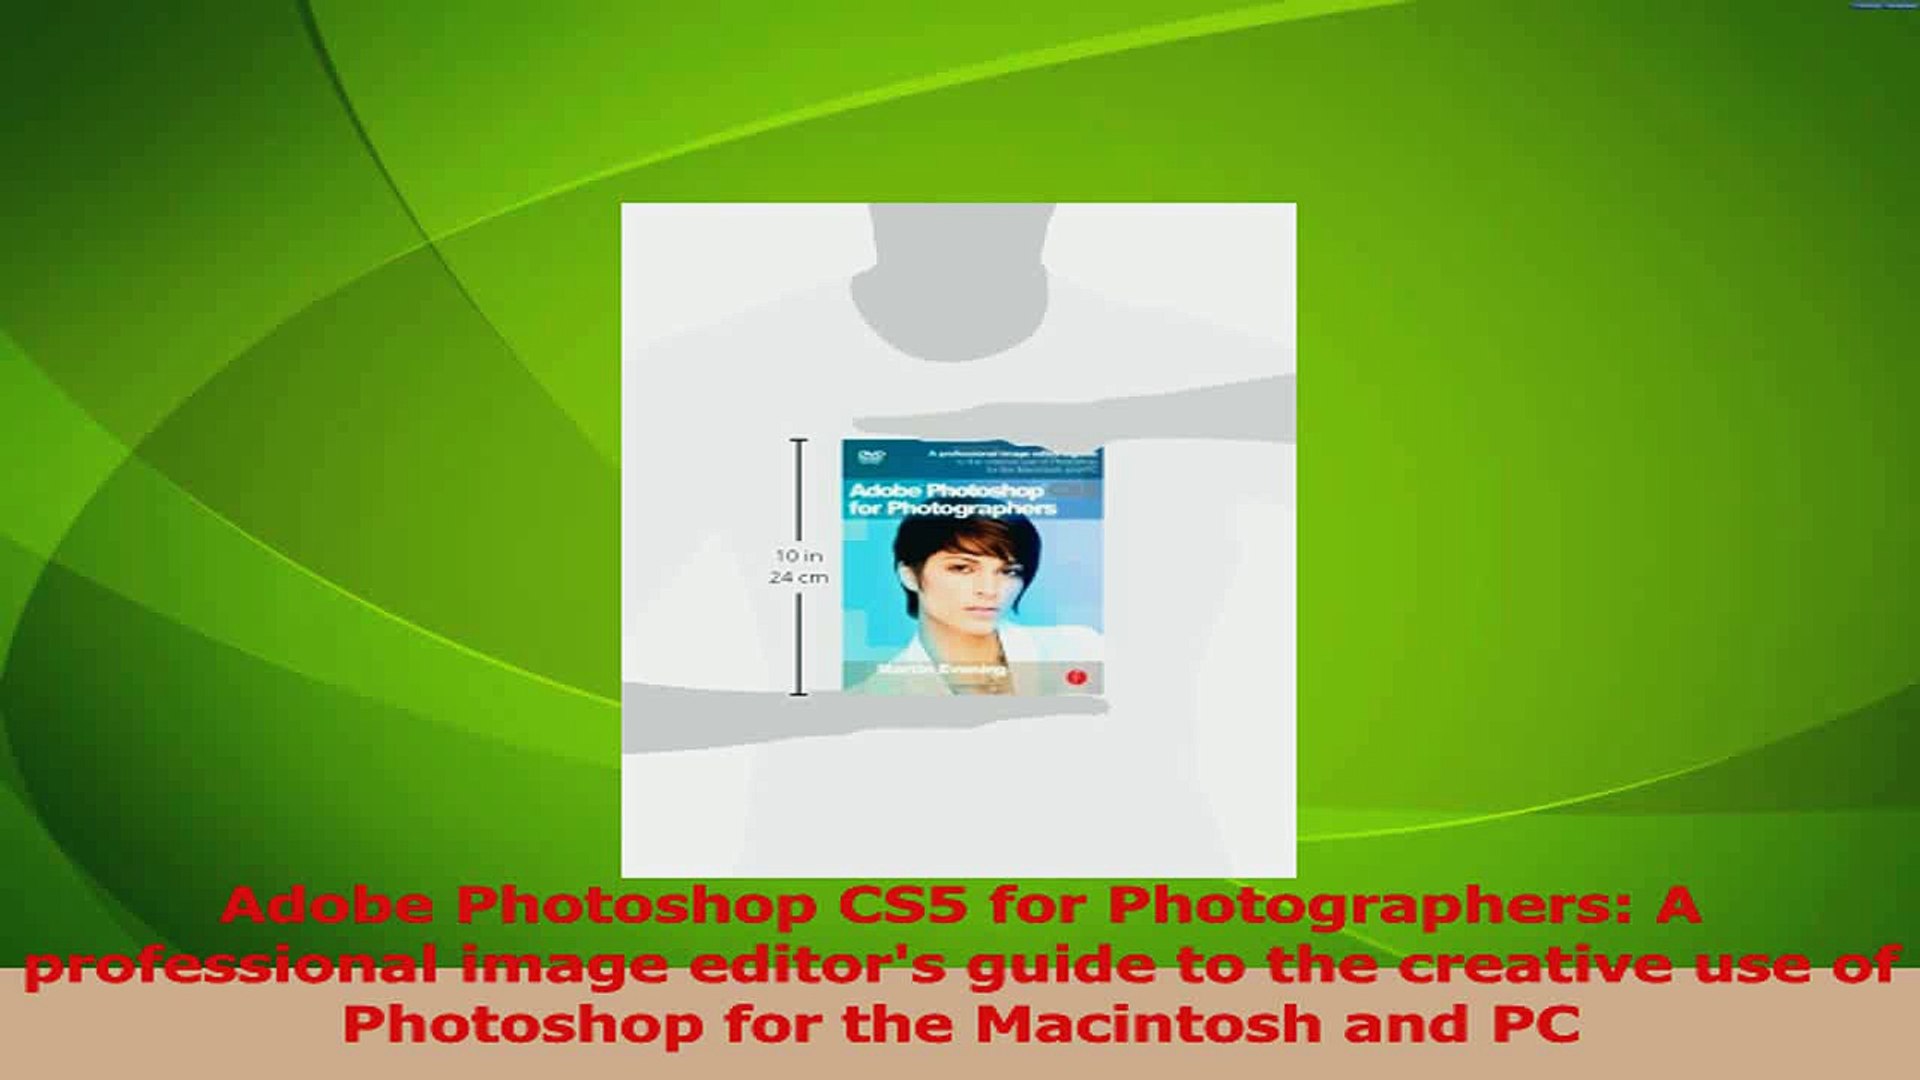 Where to buy Adobe Photoshop CS5 for Photographers